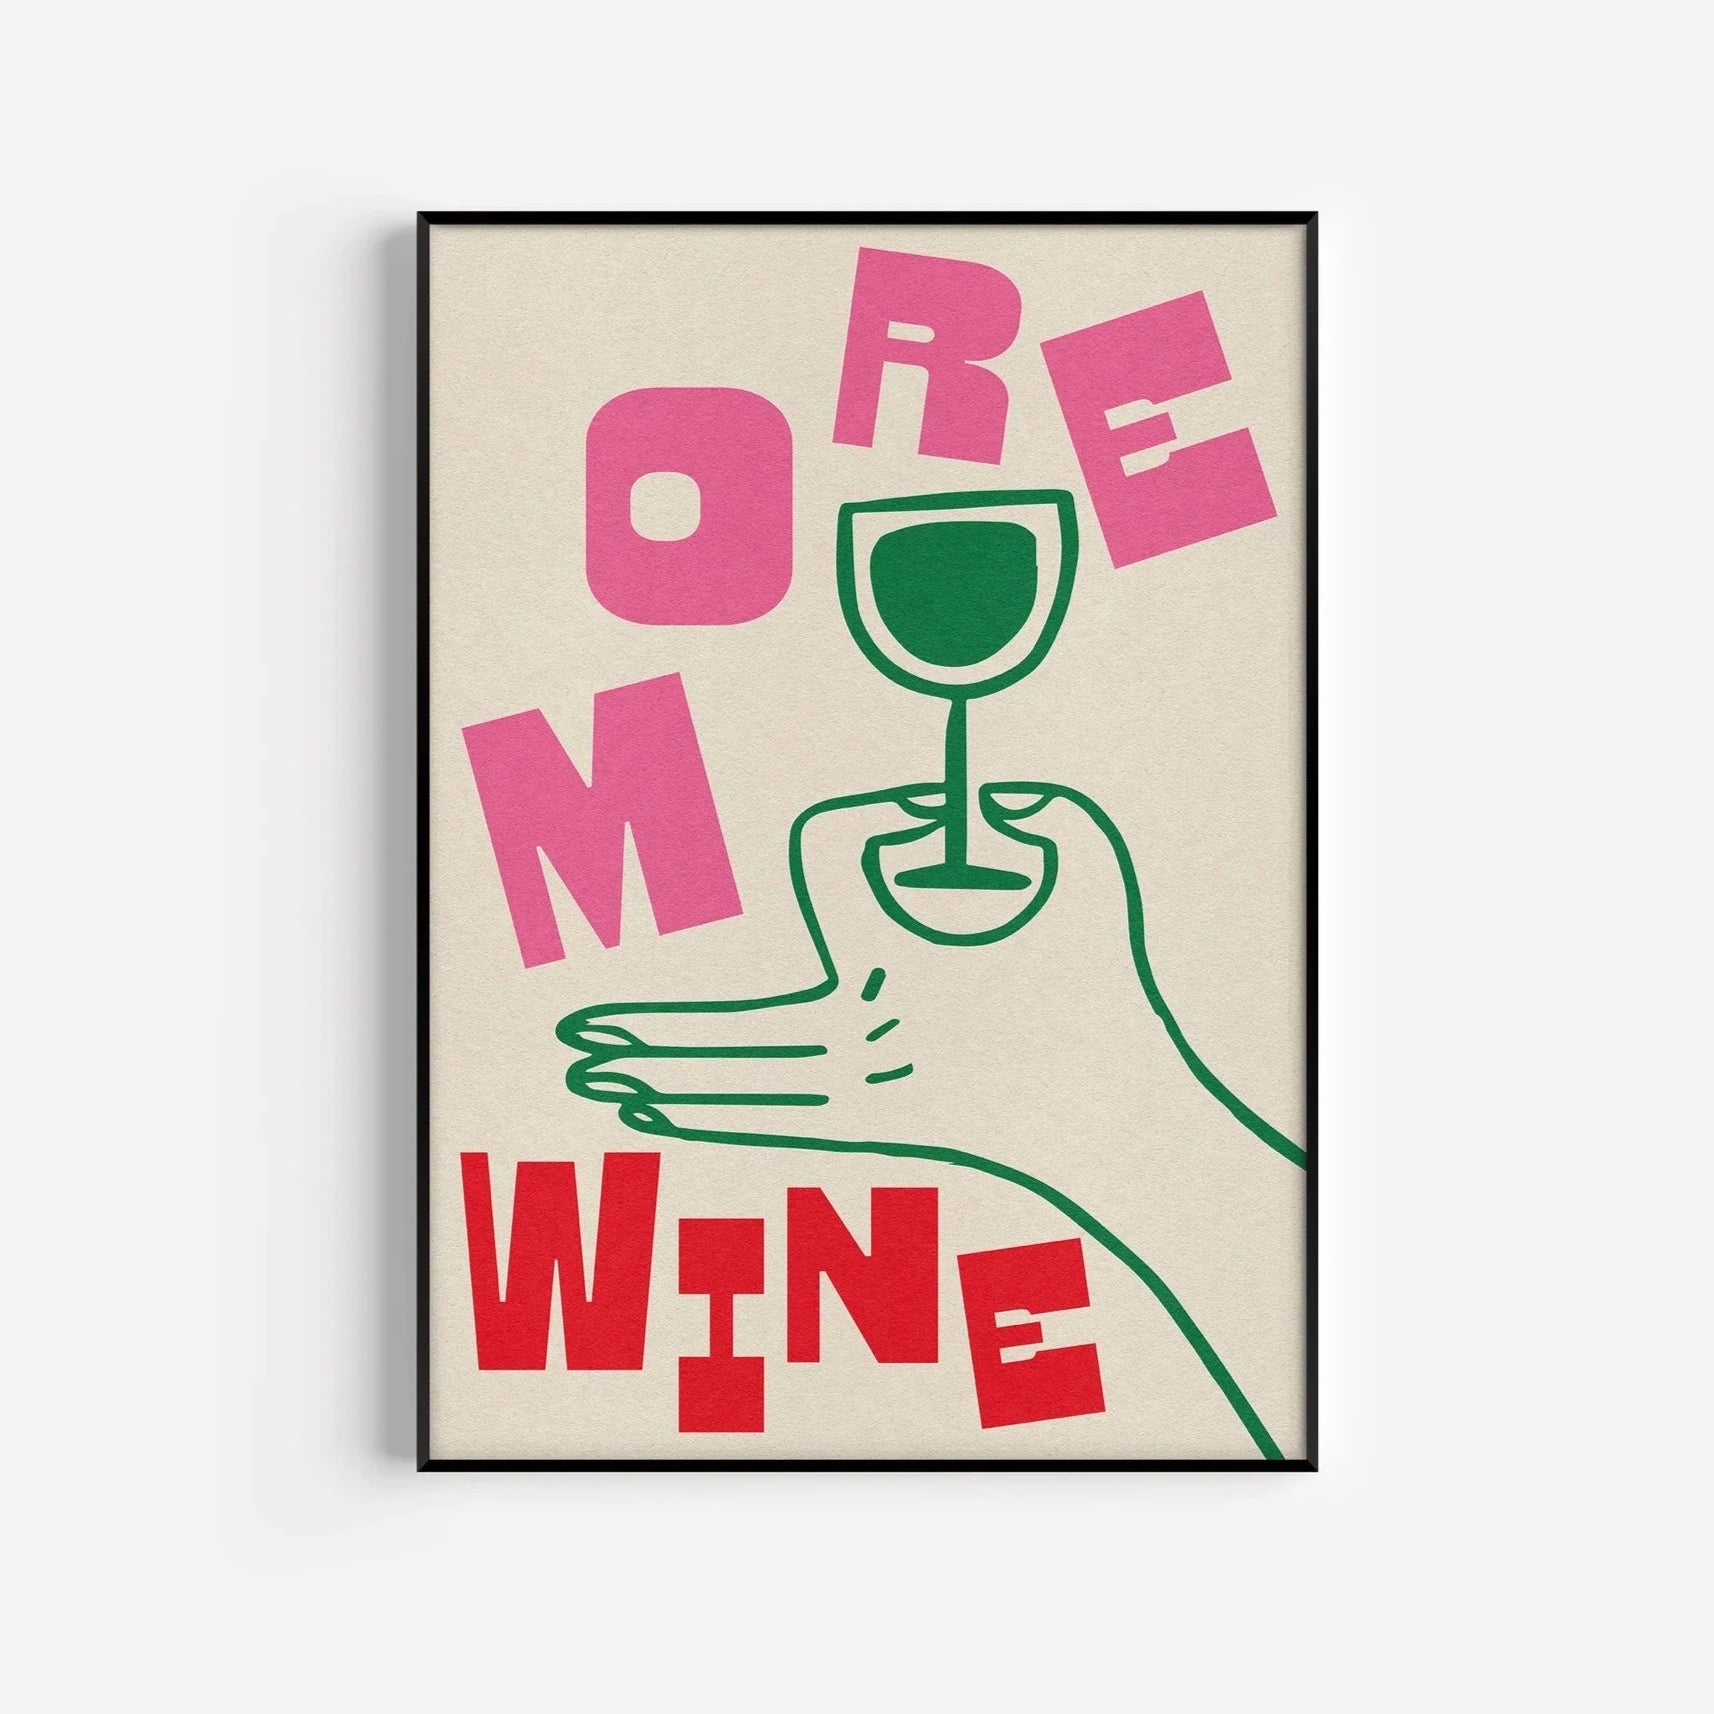 'More Wine' print